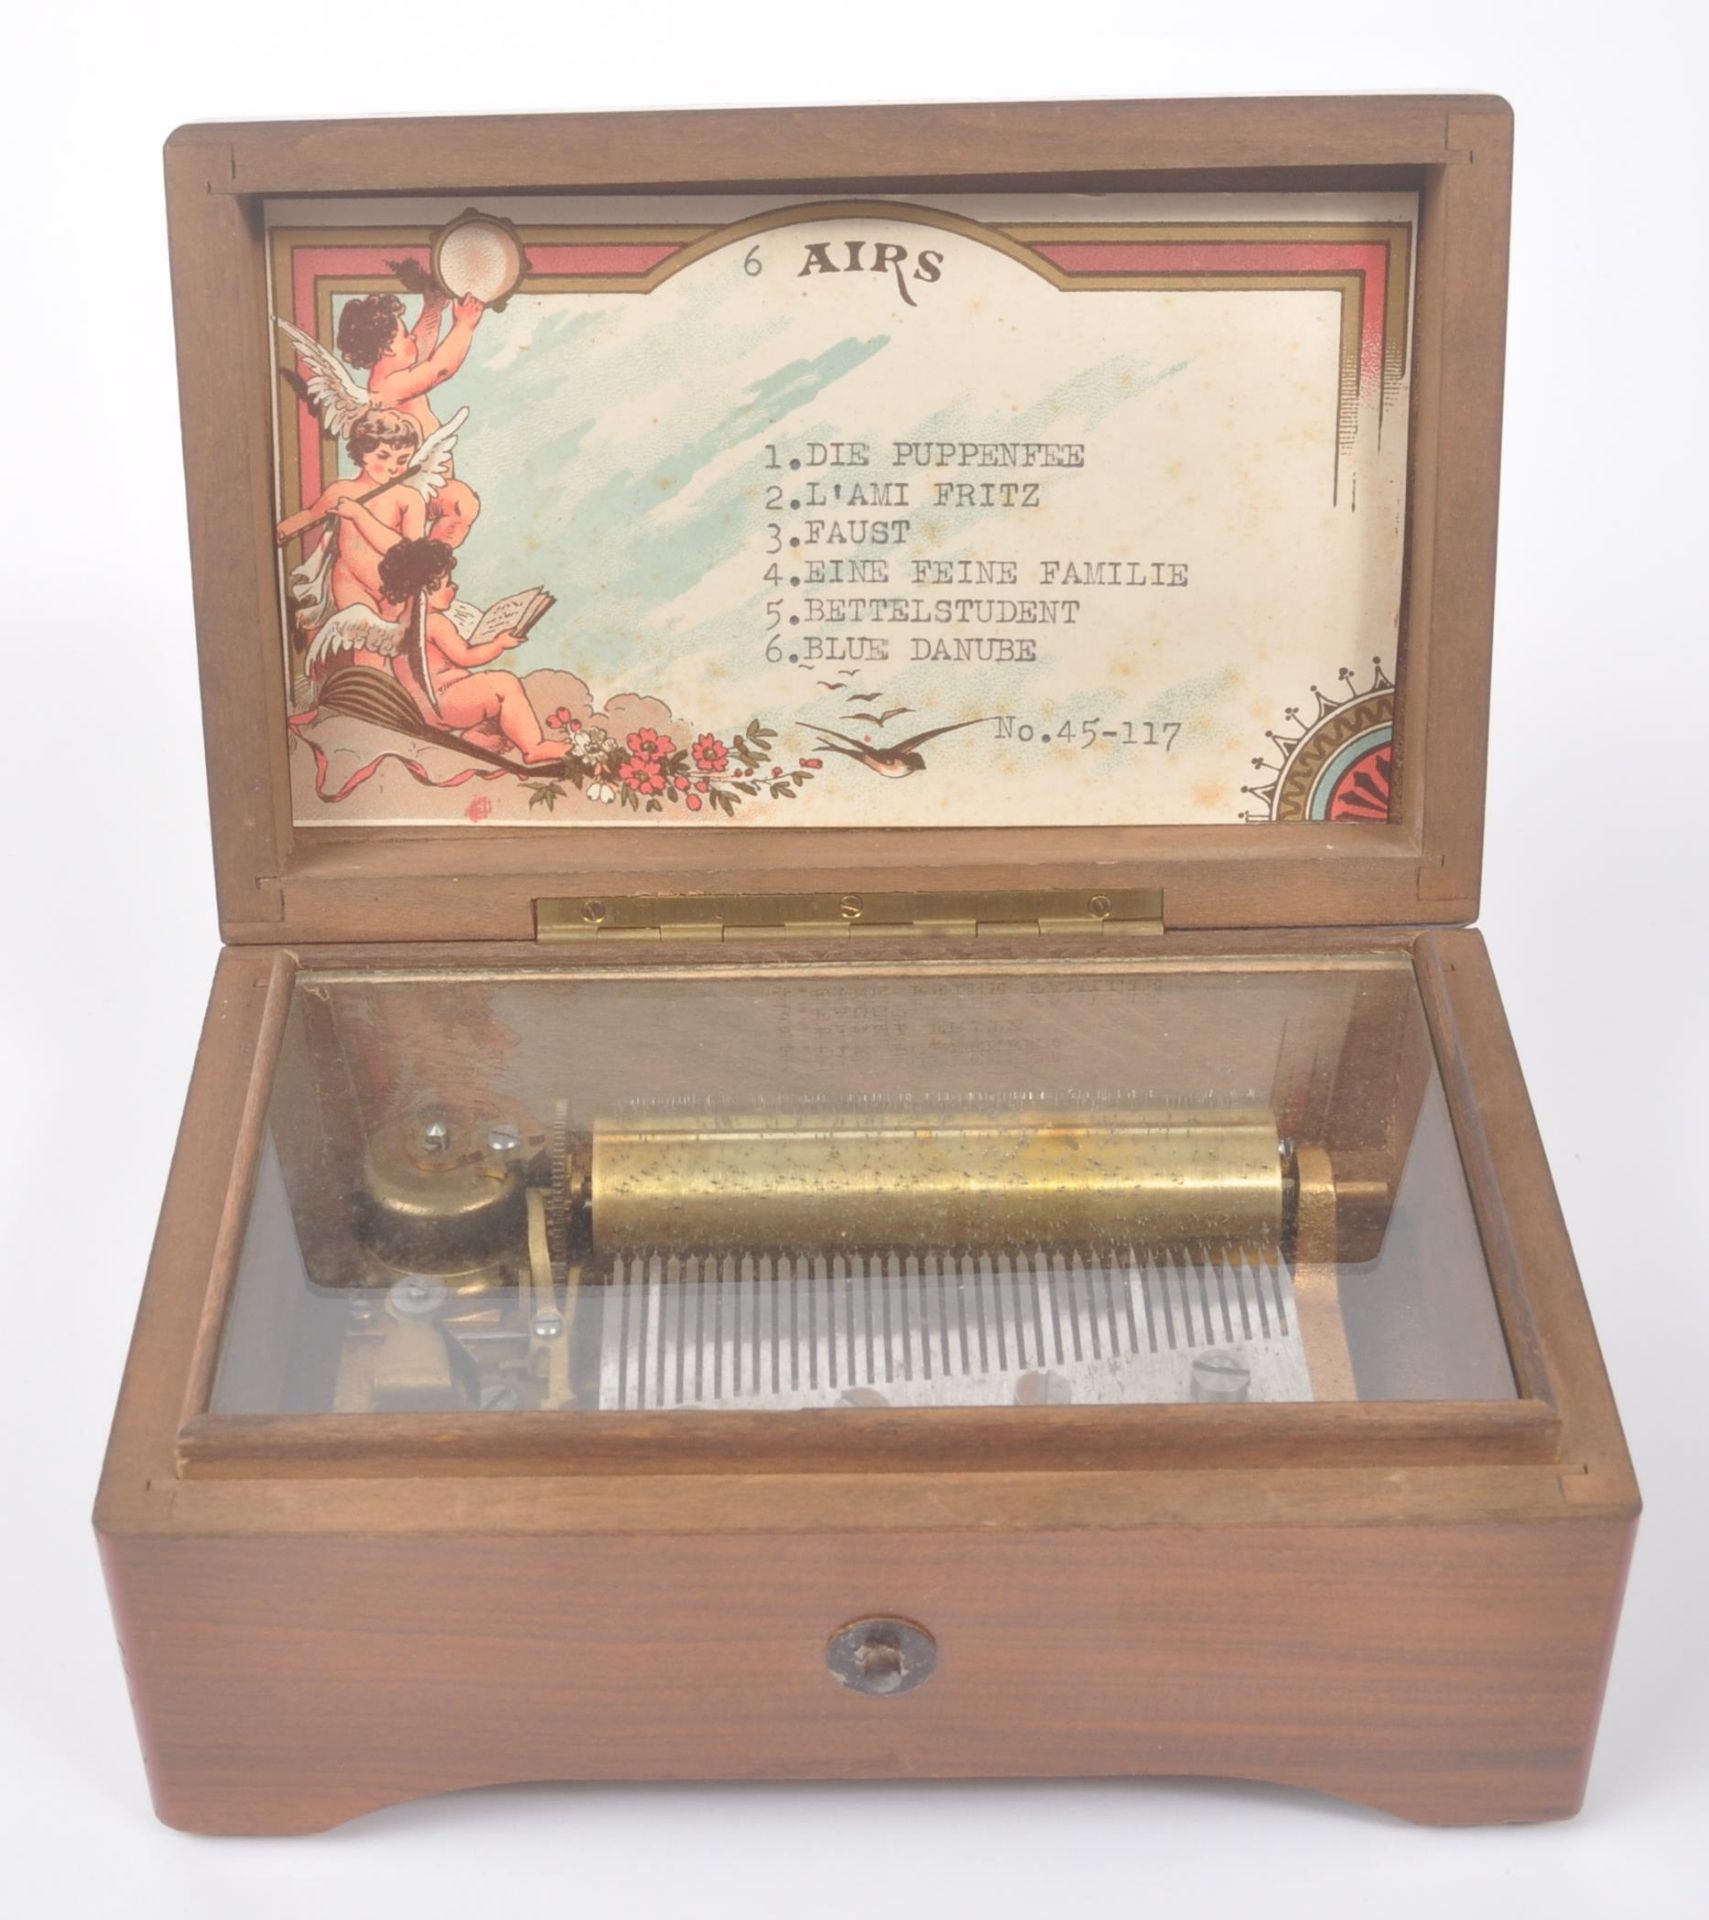 20TH CENTURY HARRODS '6 AIRS' MUSIC BOX - Image 3 of 6